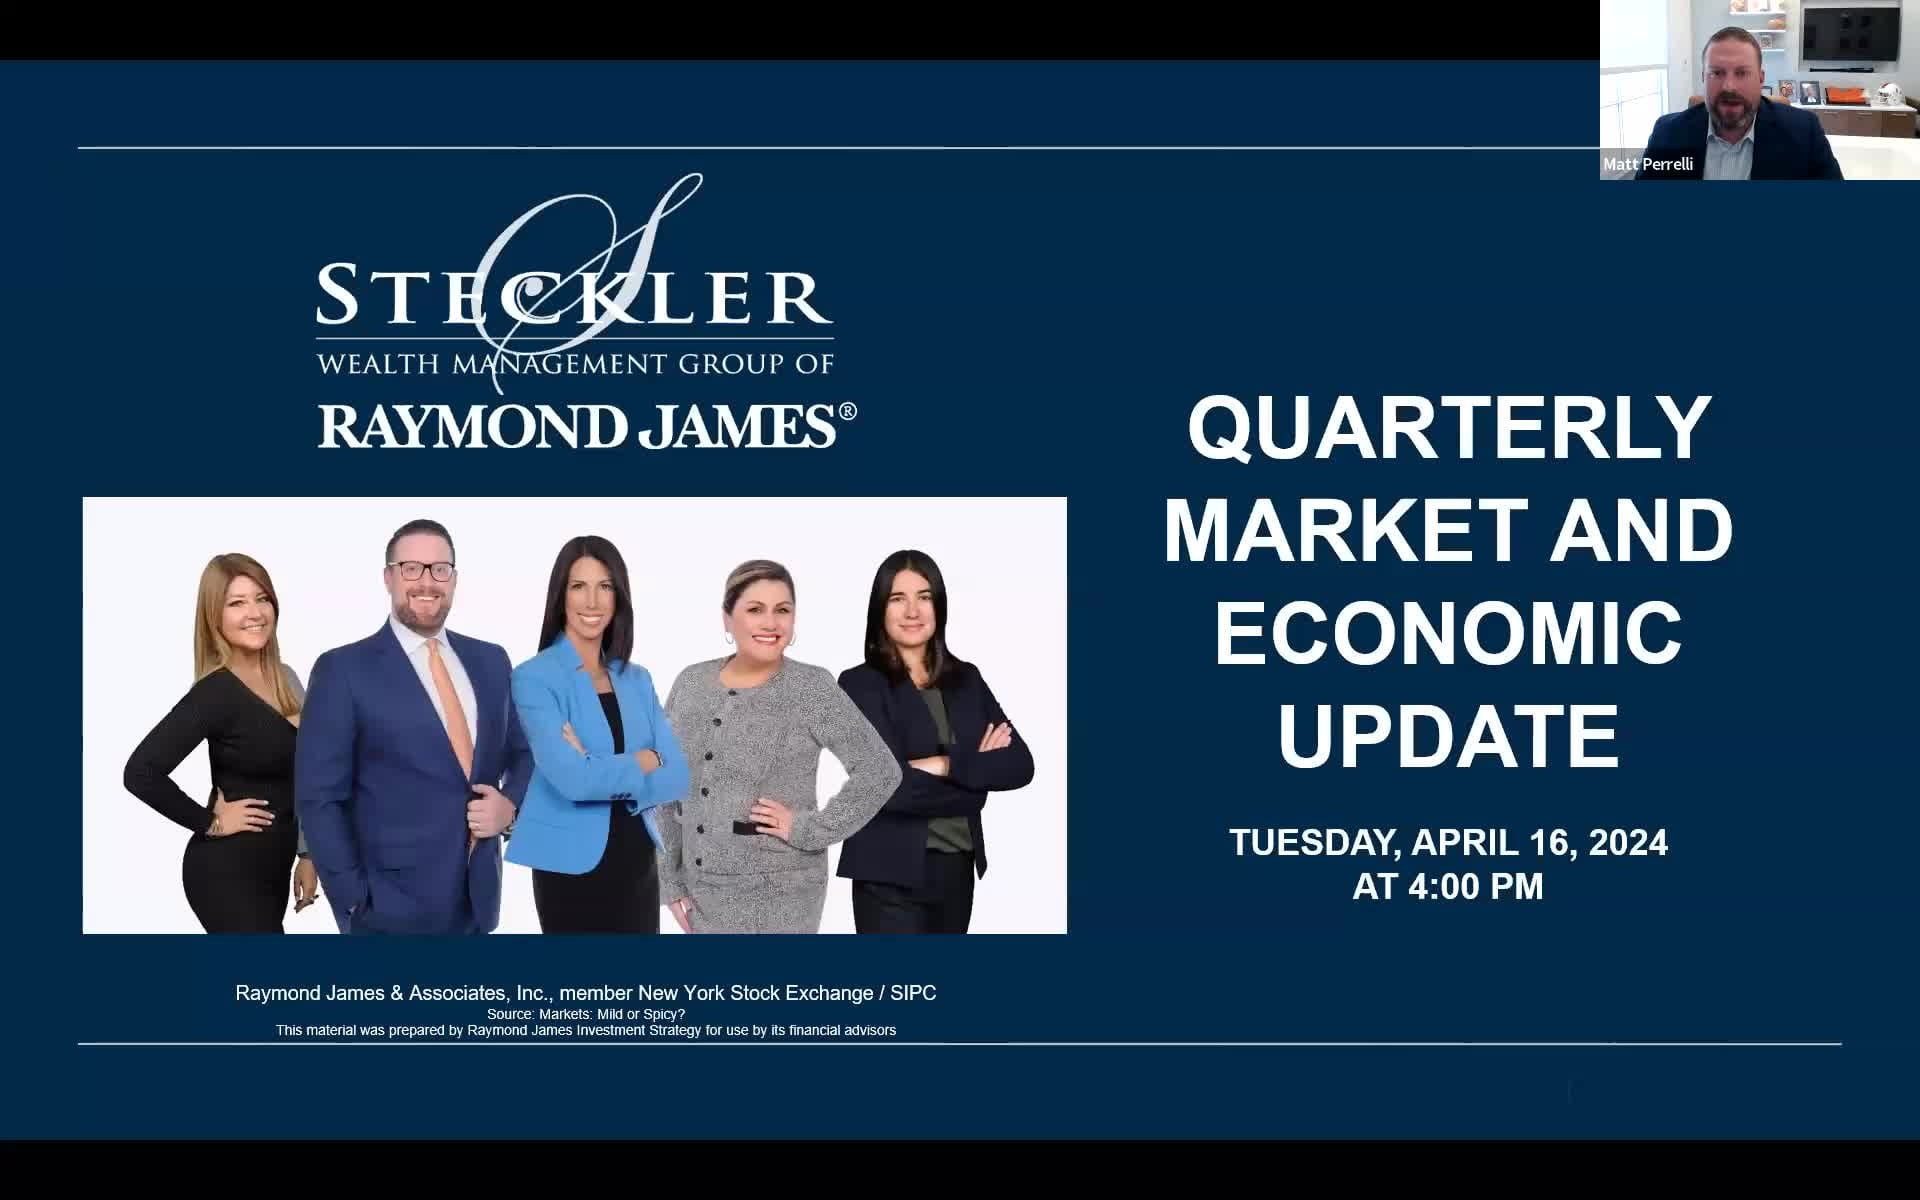 Quarterly Market and Economic Update